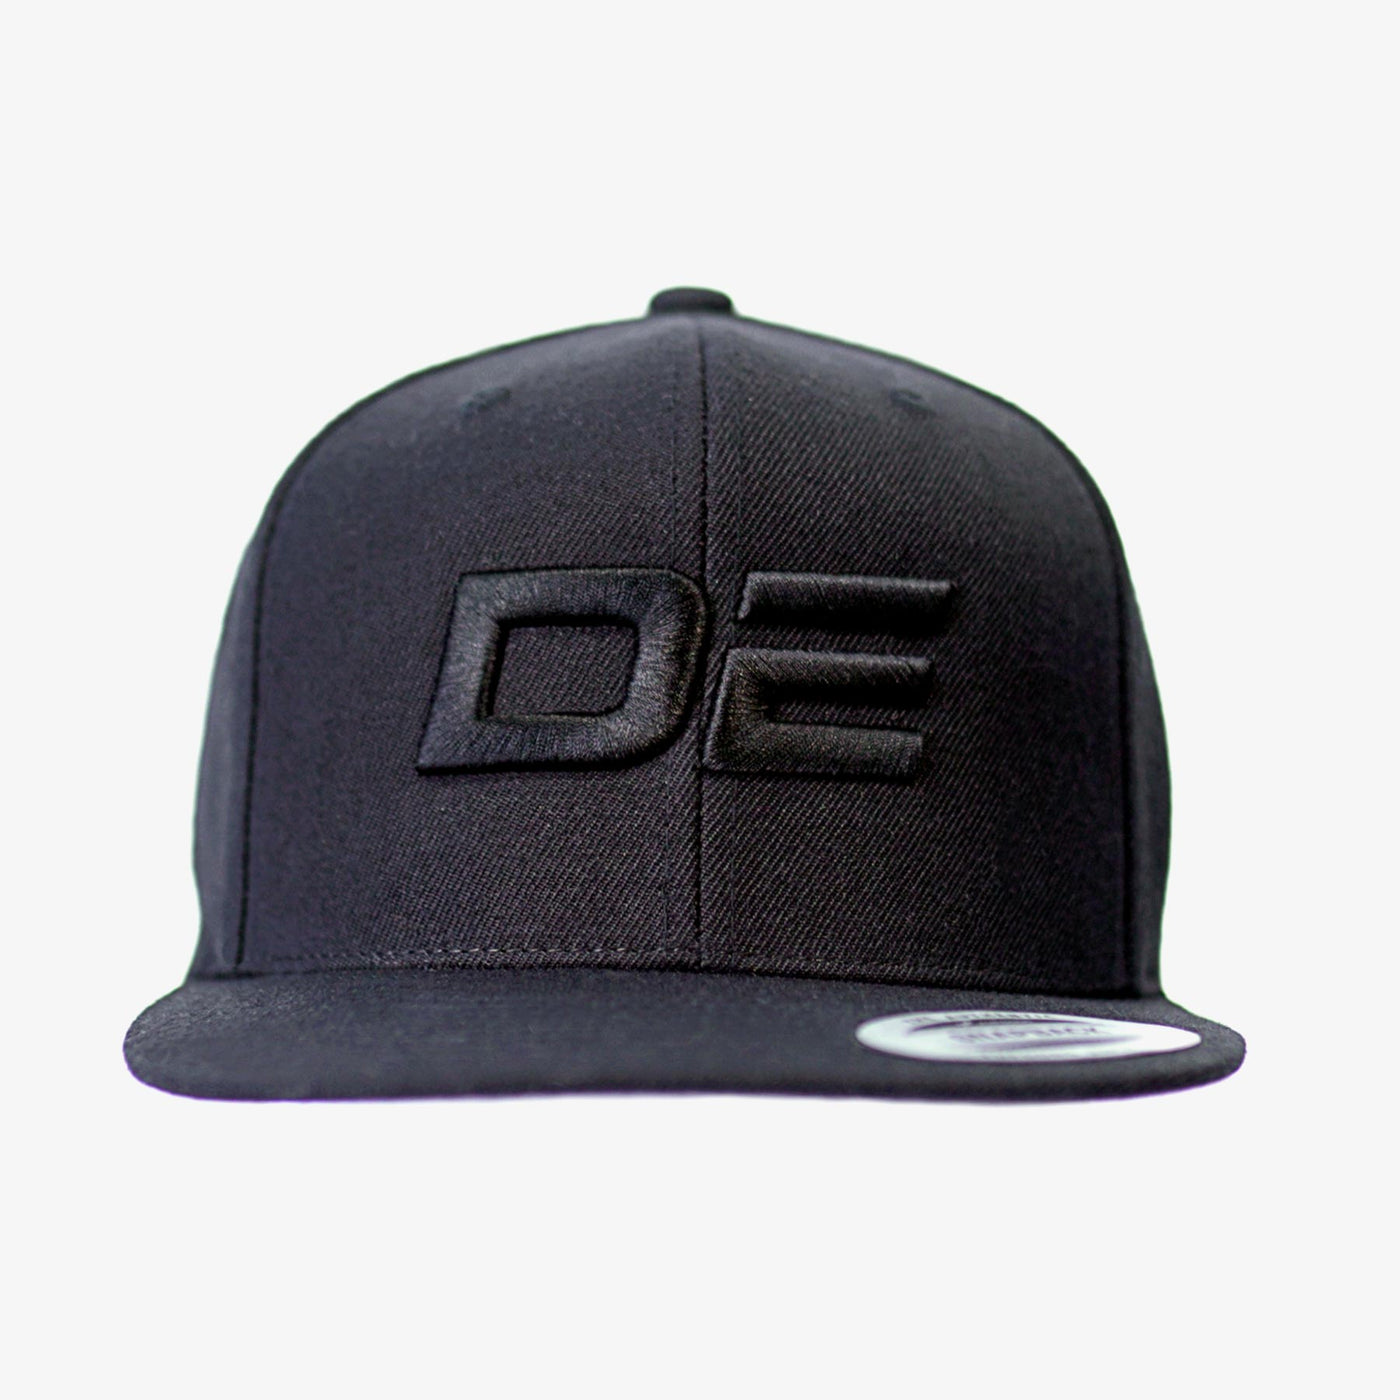 DE Logo - Snapback Black/Black Flat Peak Cap